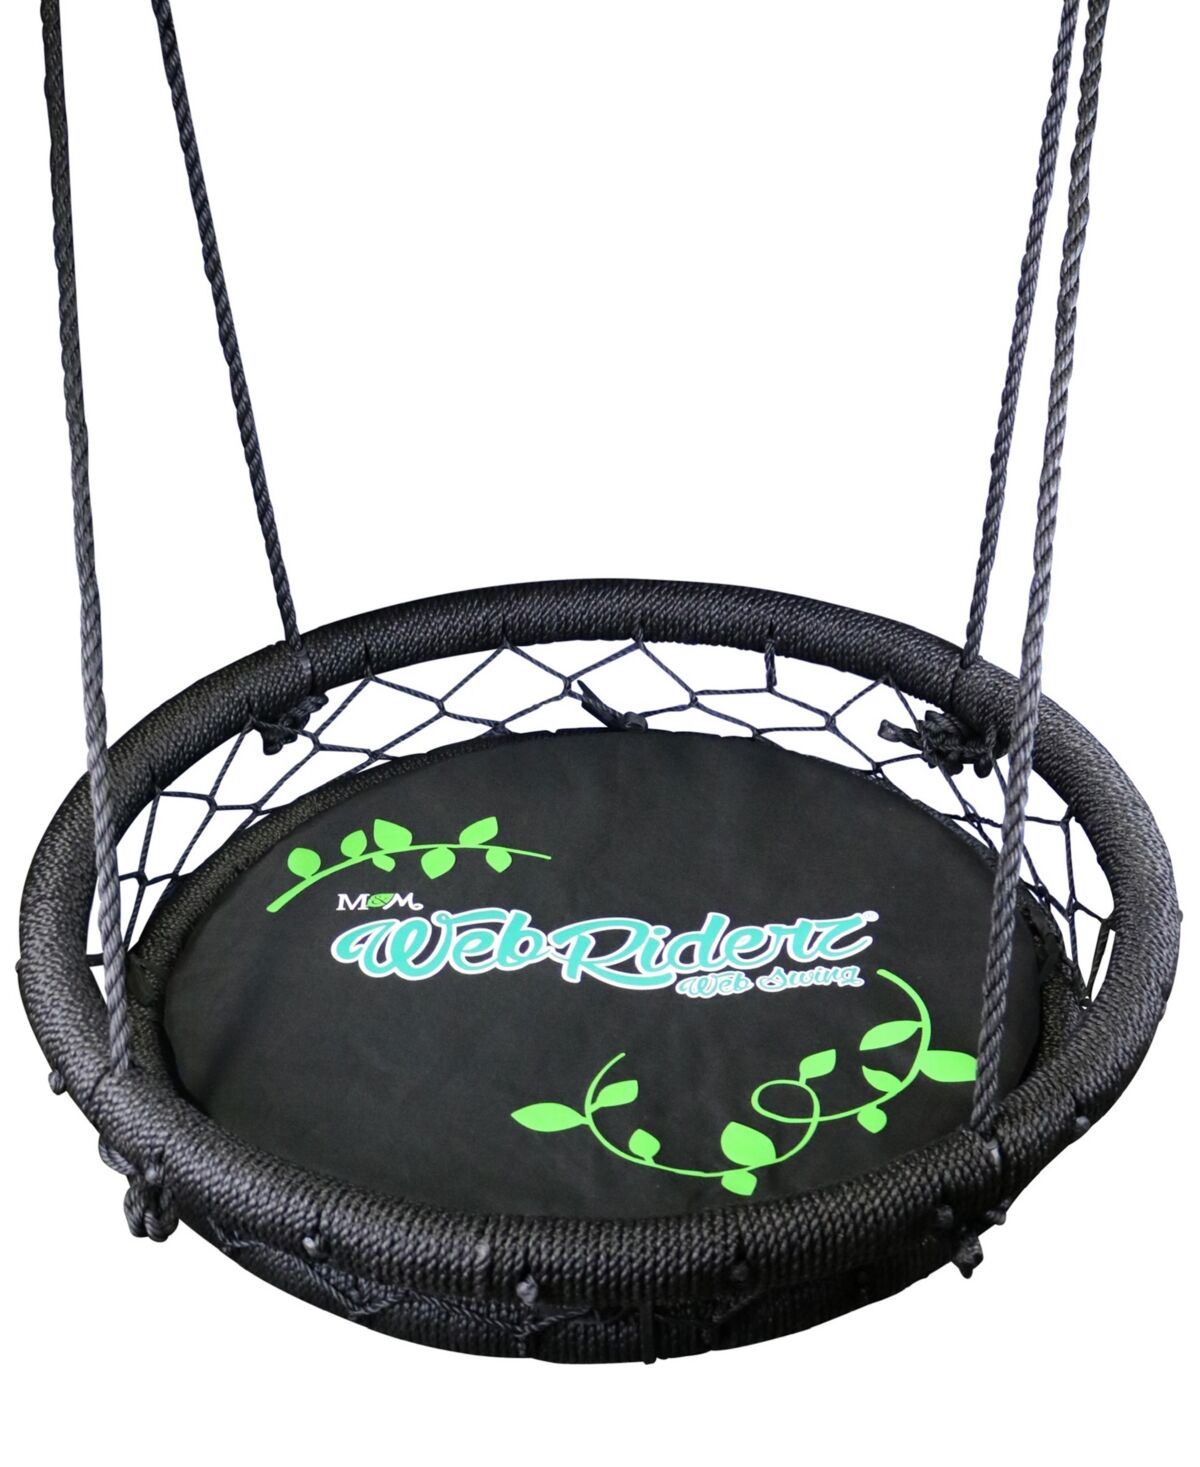 M&m Sales Enterprises Web Riders Basket Web Swing